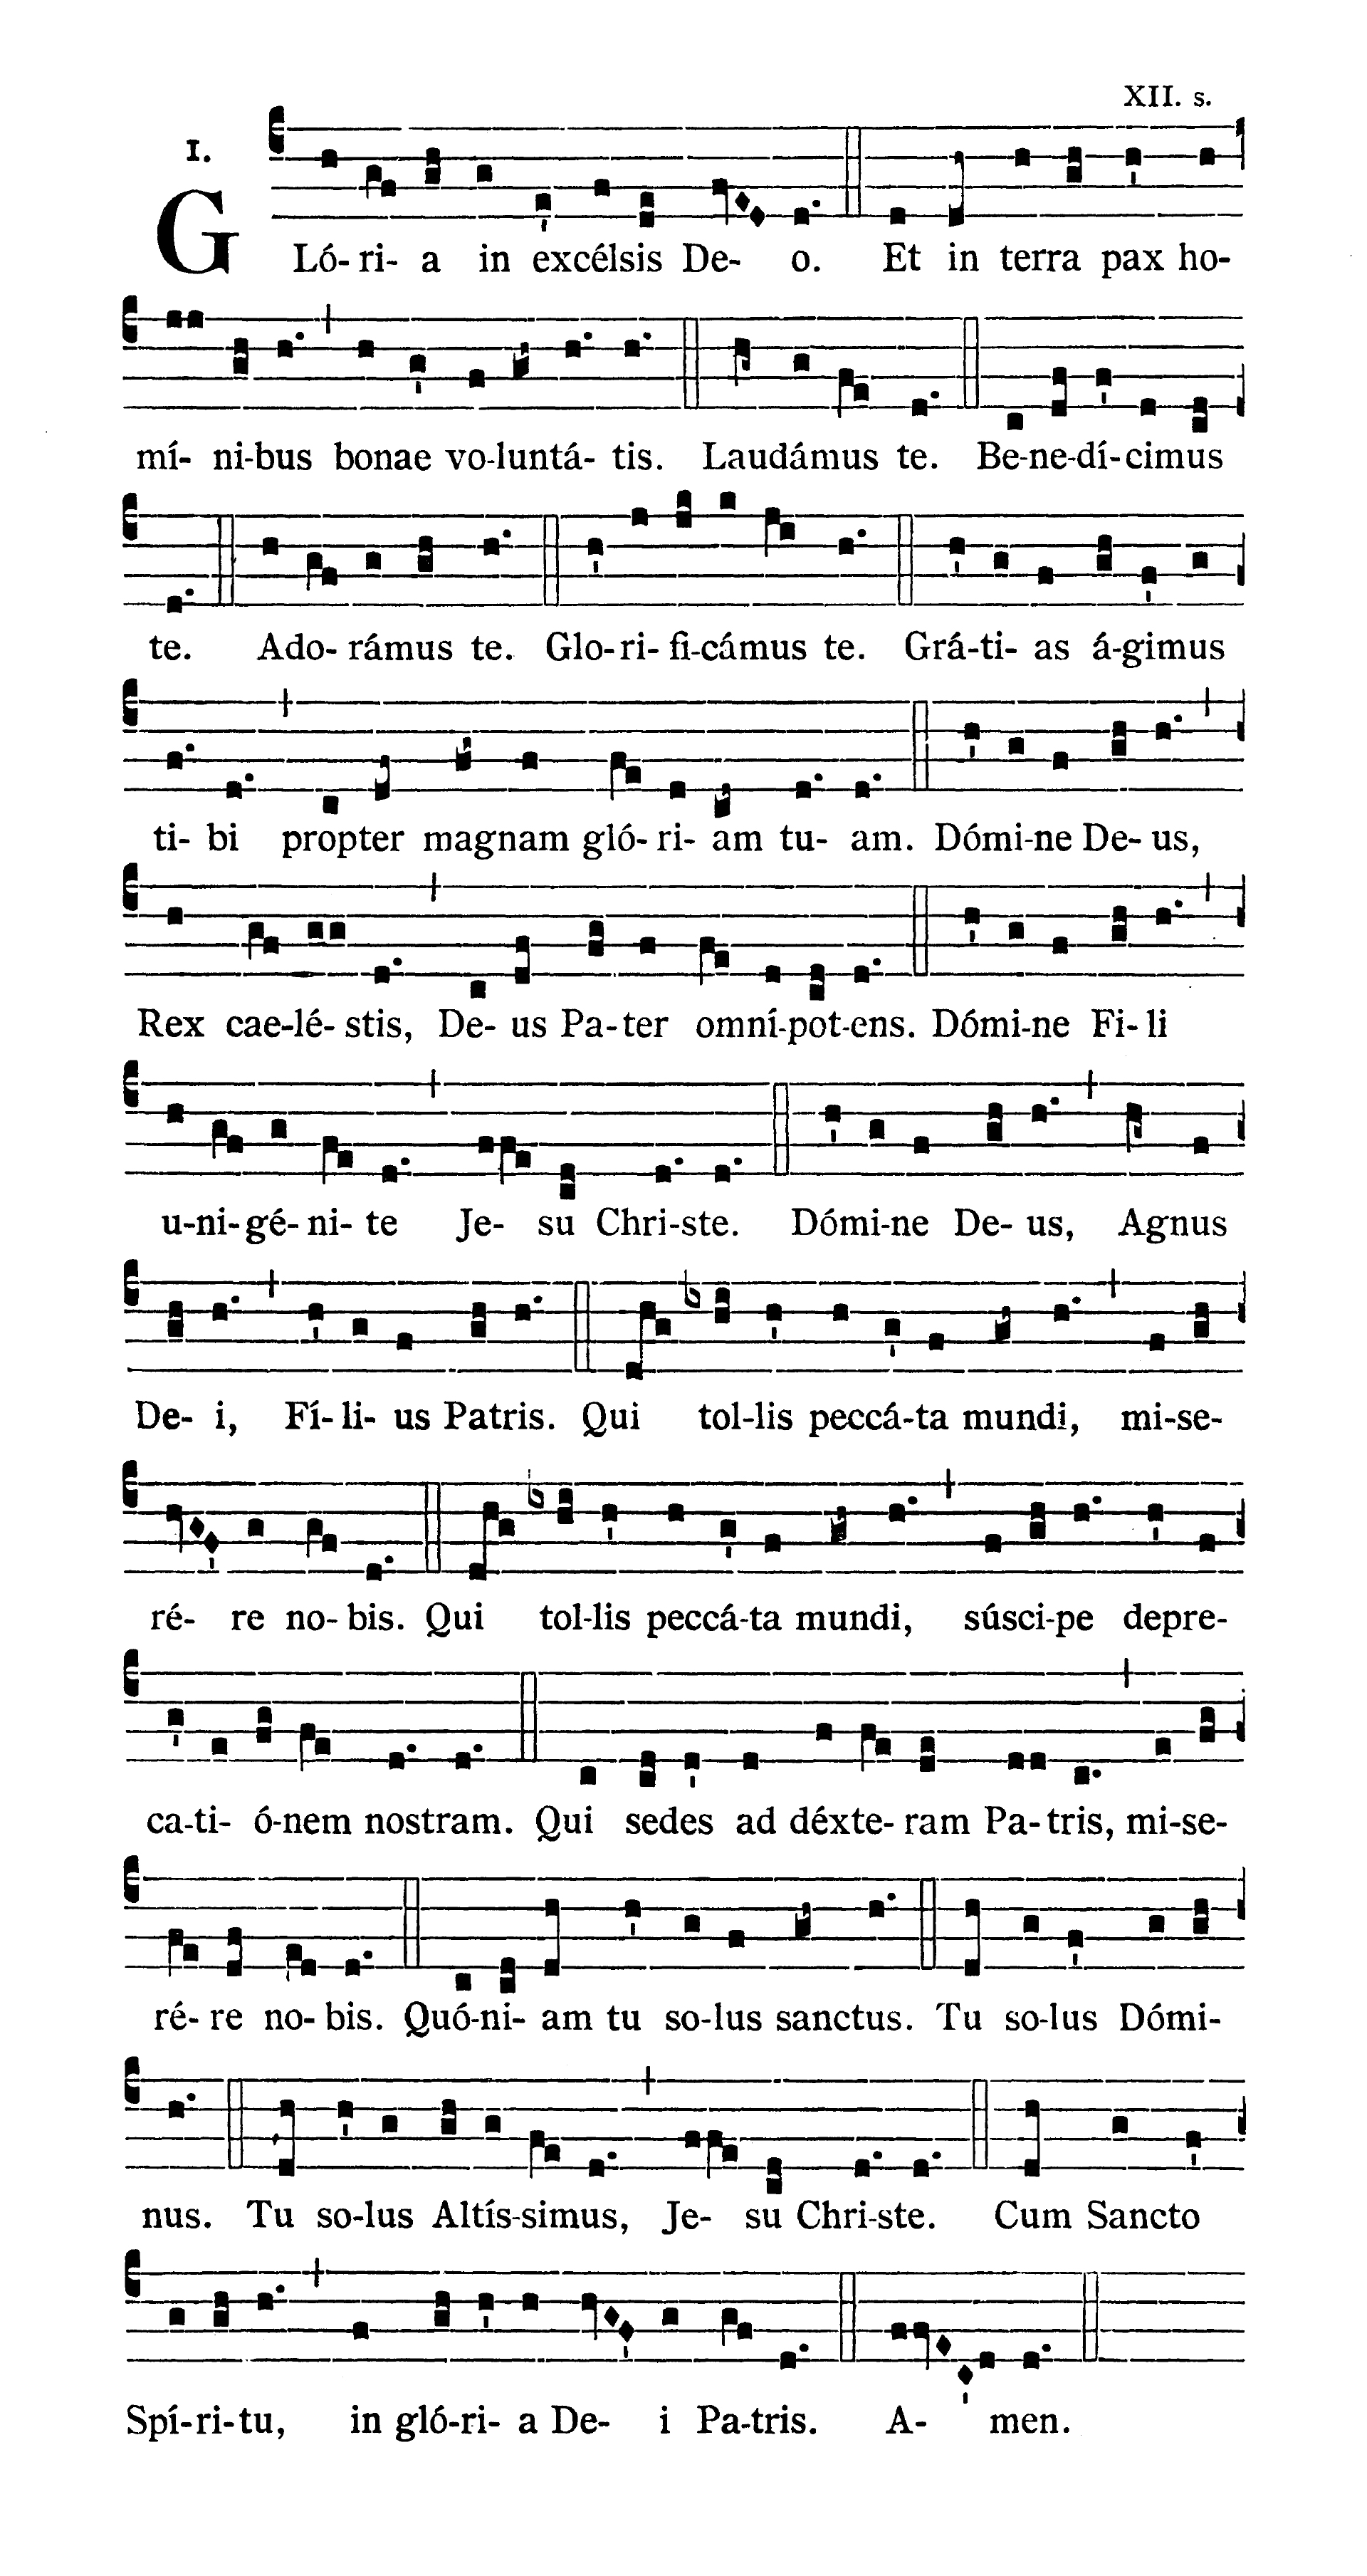 Missa XIII (Stelliferi Conditor orbis) - Gloria